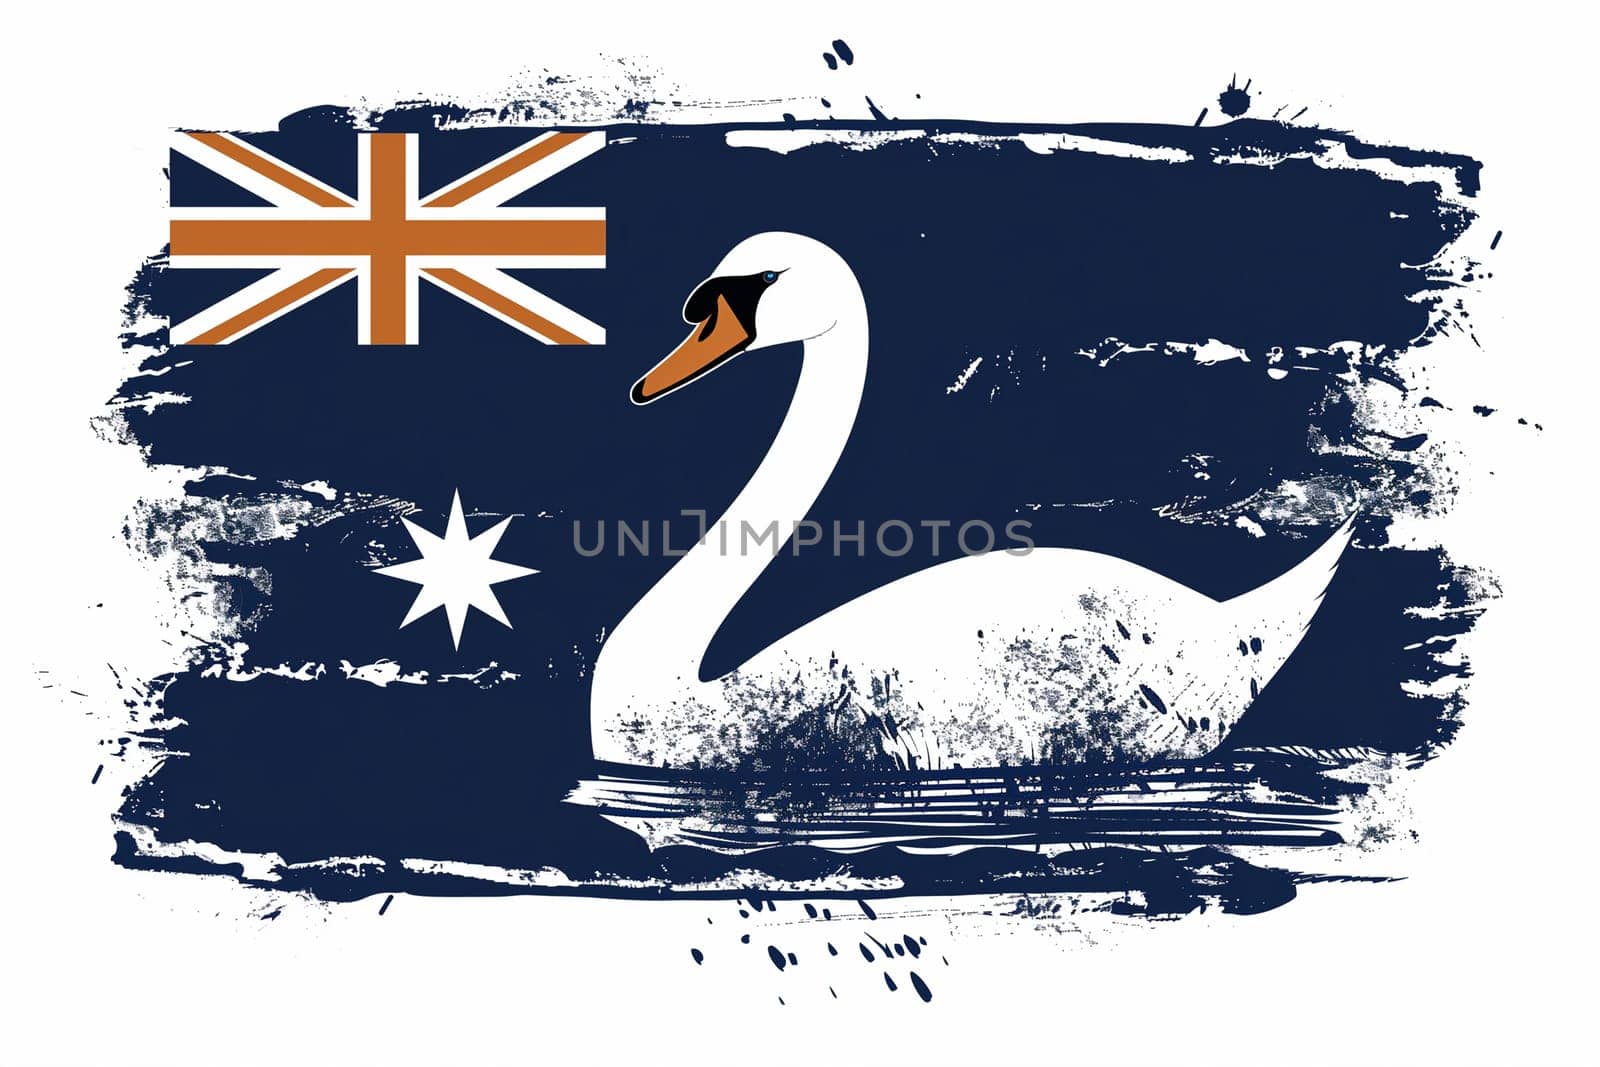 The Australian flag featuring a swan, symbolizing Western Australia Day.